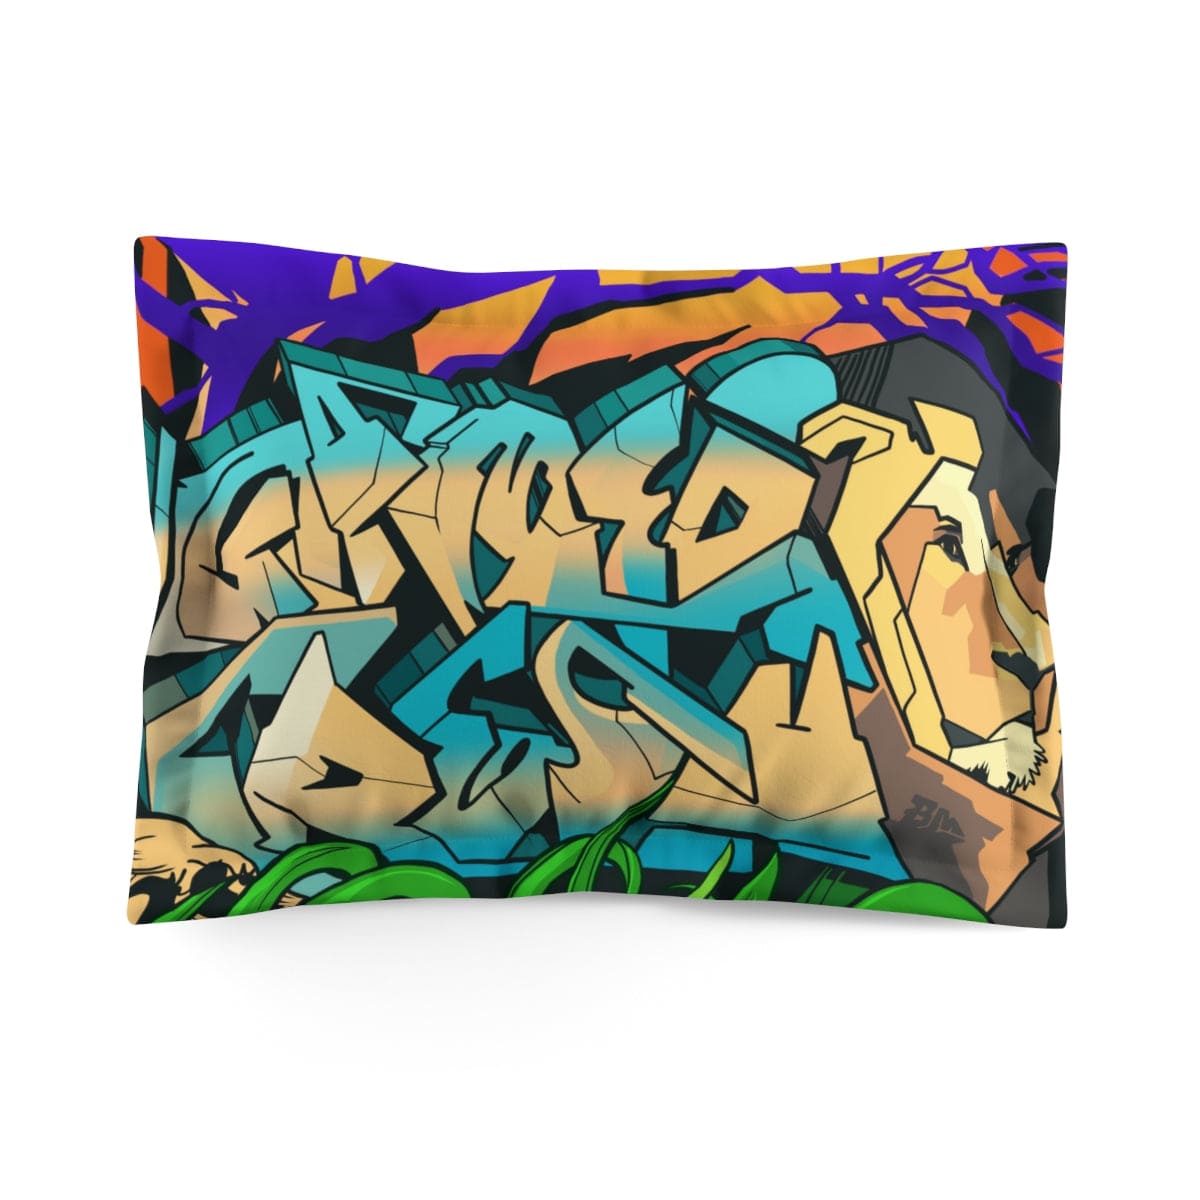 Gamer Fresh Graffiti NYC Lion Mural | Microfiber Sun Burst Orange Pillow Sham